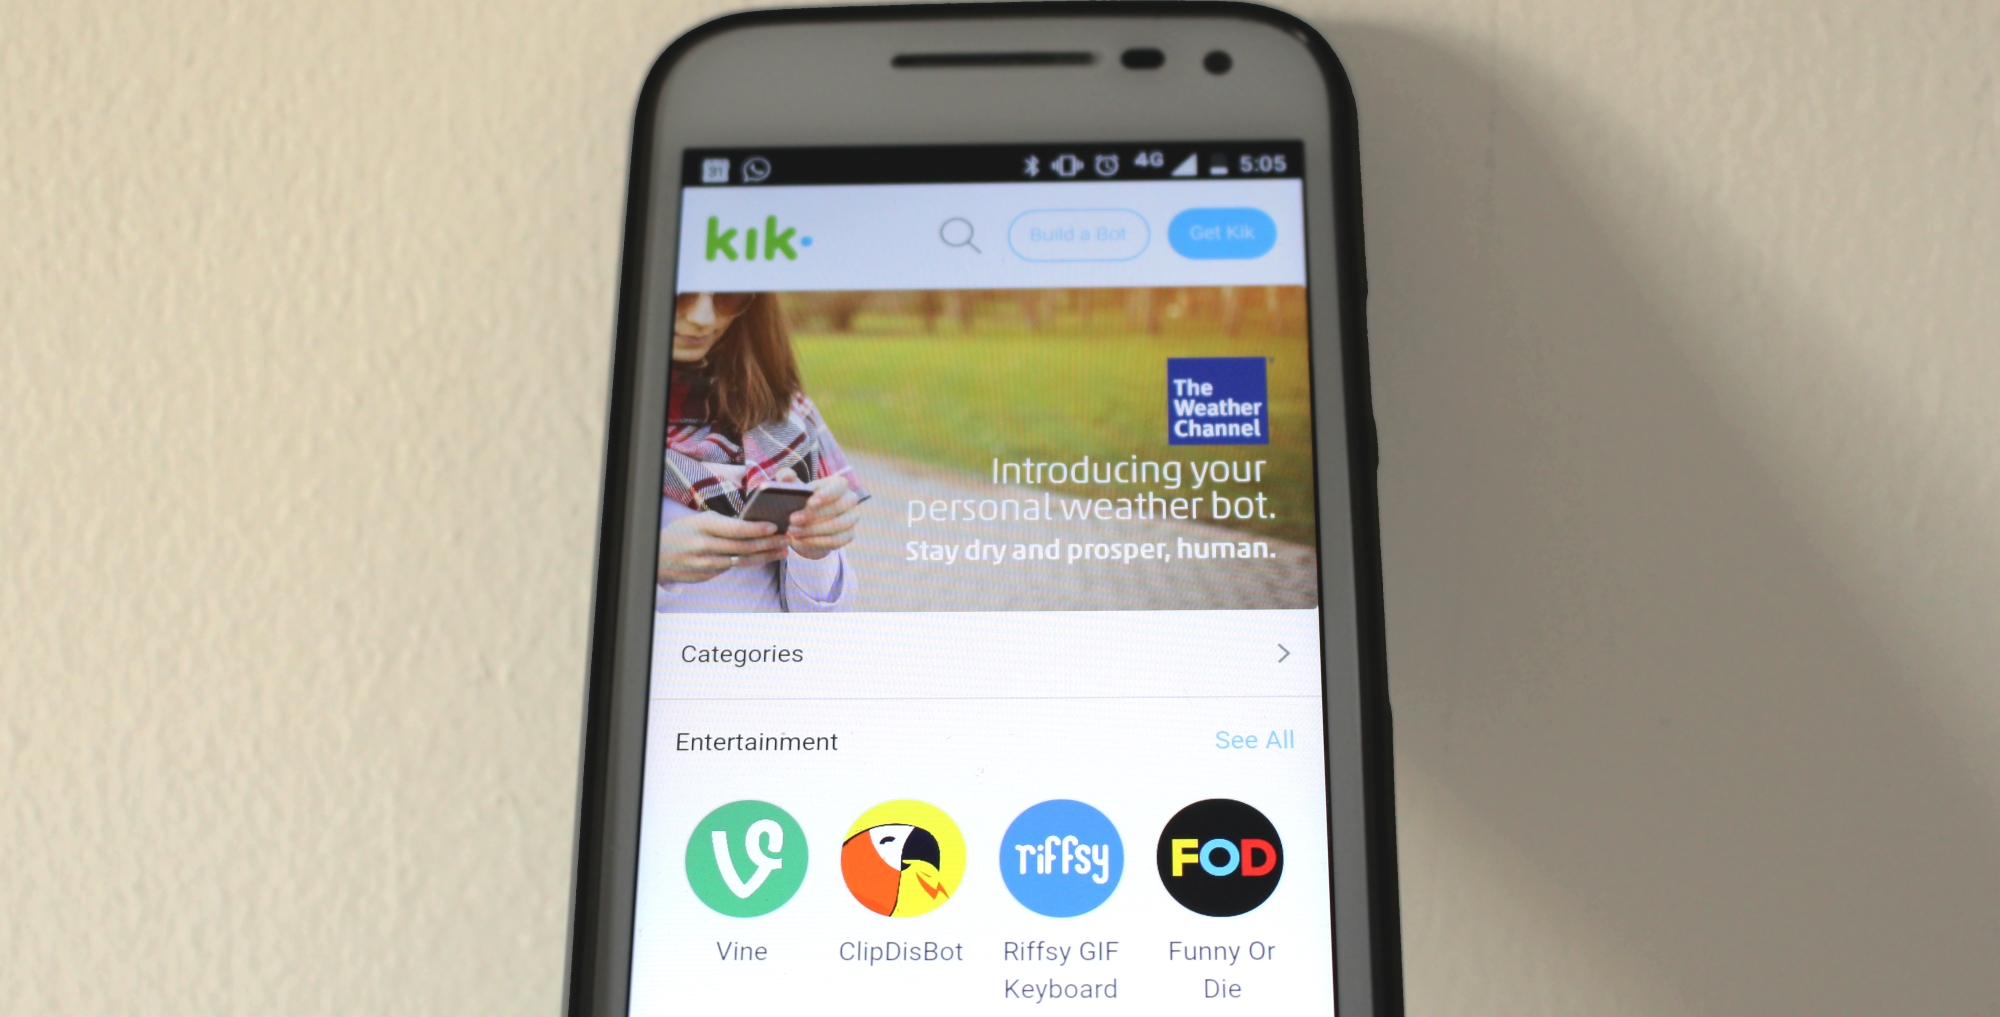 Kik Boots Up Bots in its Messaging App